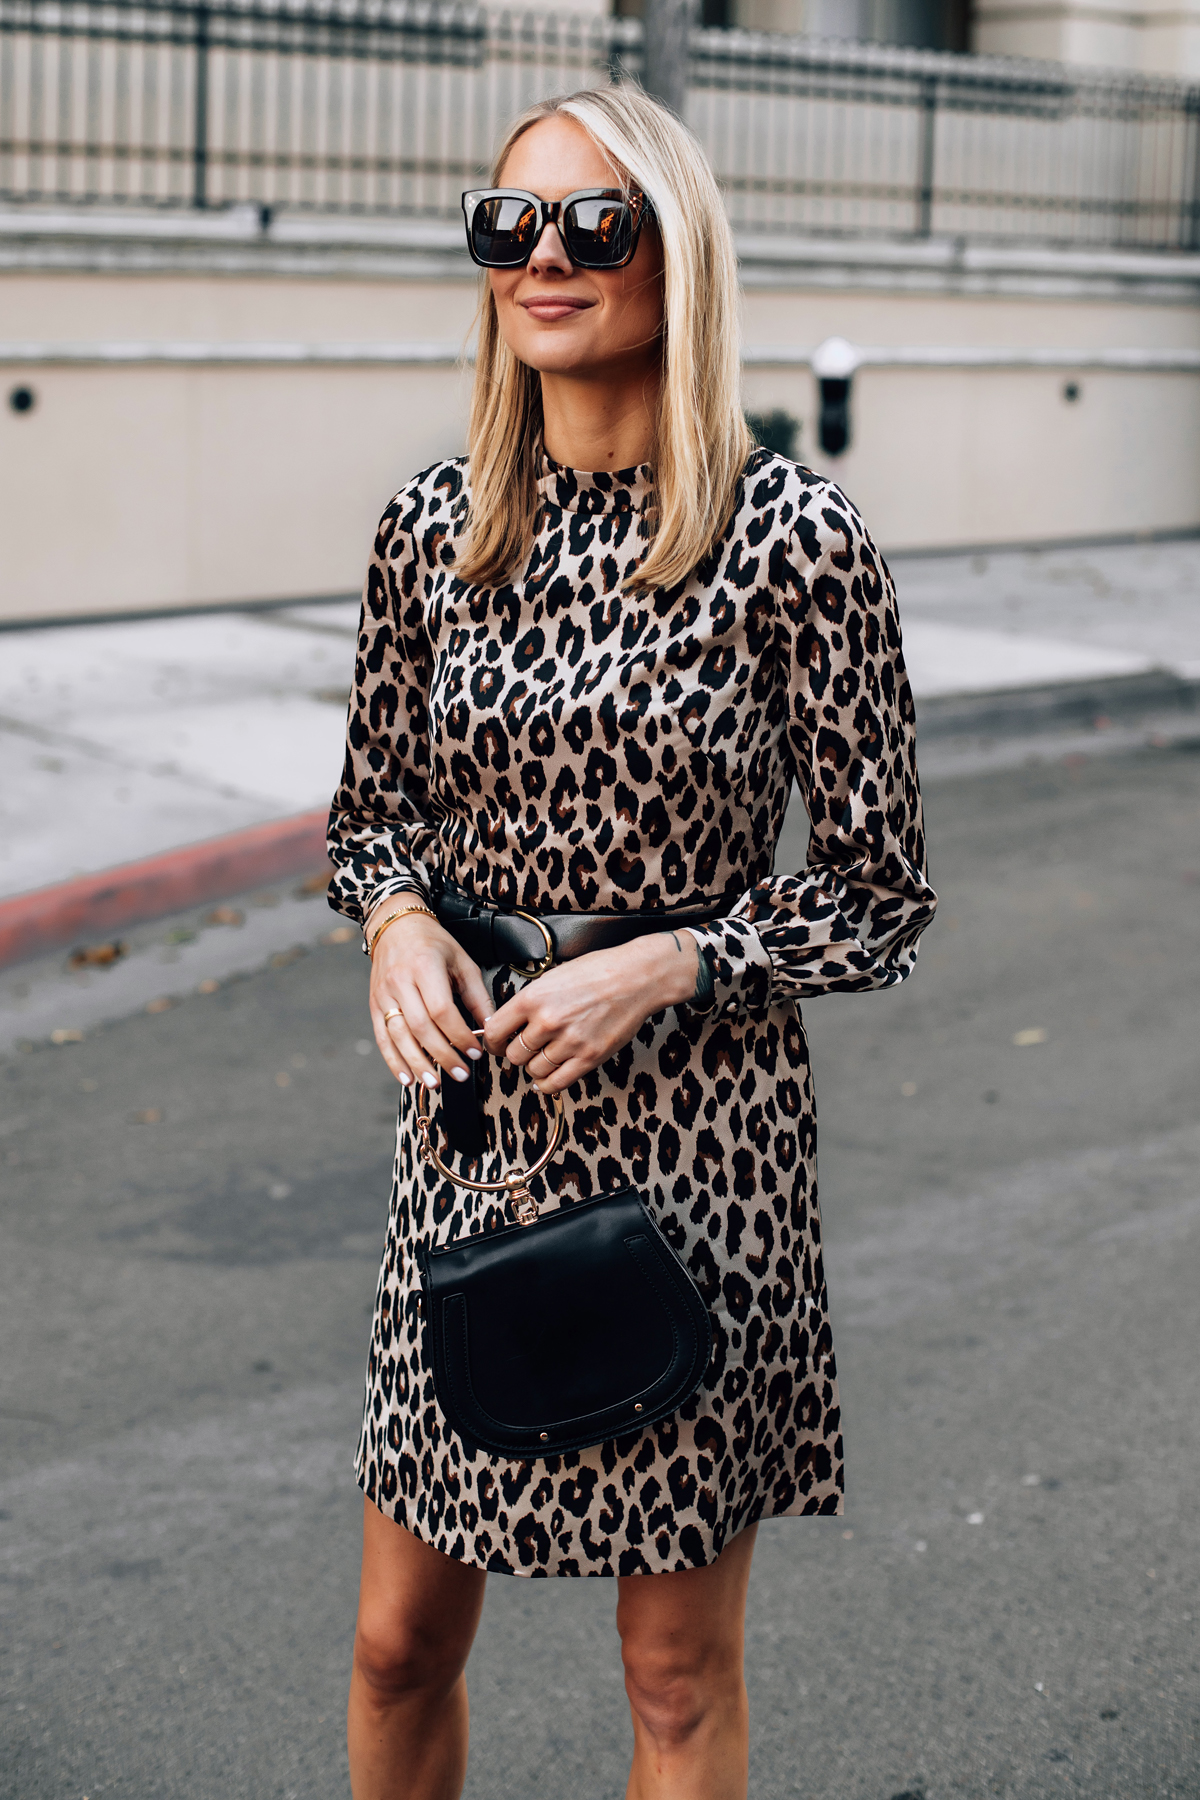 Blonde Woman Wearing Ann Taylor Leopard Dress with Black Belt Fashion Jackson San Diego Fashion Blogger Street Style